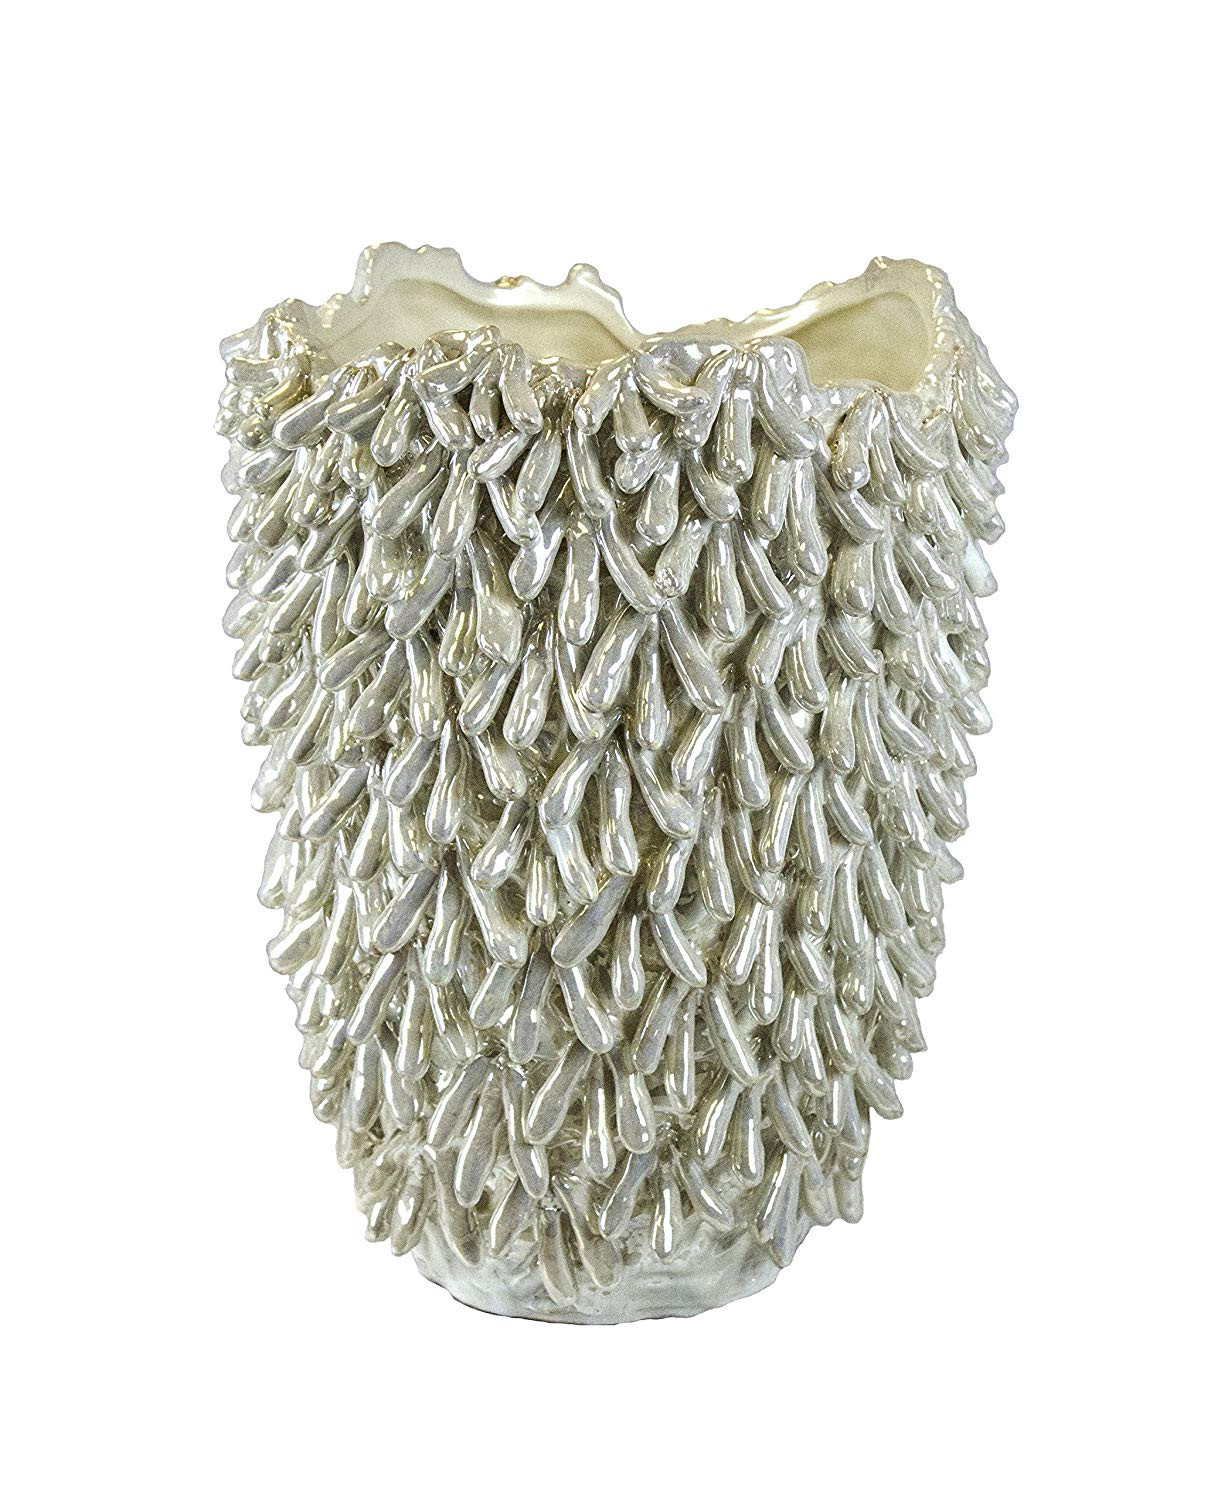 27 Wonderful Glass Sea Urchin Vase 2024 free download glass sea urchin vase of amazon com decorative ceramic sea urchin vase 7 25 x 7 25 x 9 5 for amazon com decorative ceramic sea urchin vase 7 25 x 7 25 x 9 5 beige home kitchen